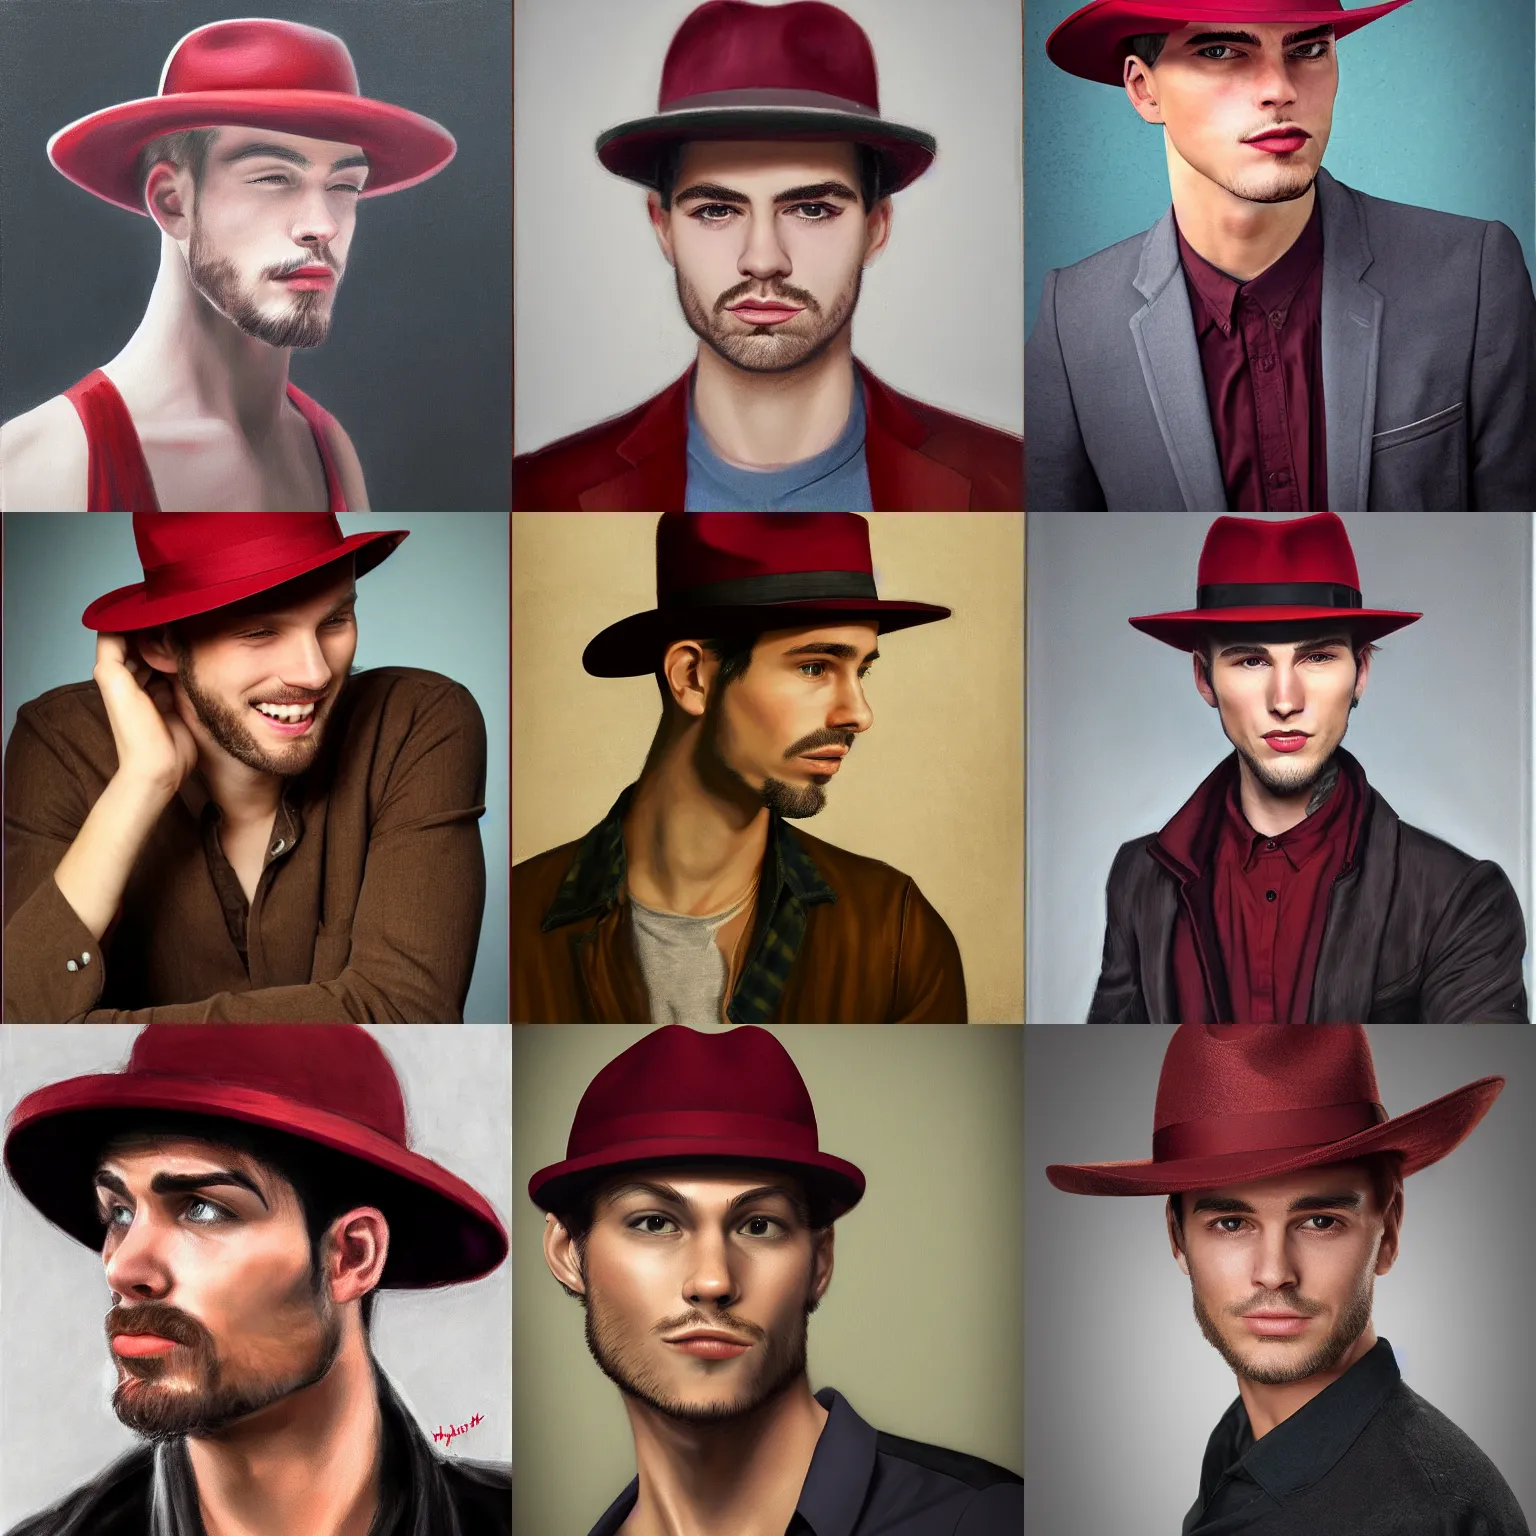 Prompt: hyperrealistic portrait young man ethan hawk strong jawline dark red fedora hat smirk